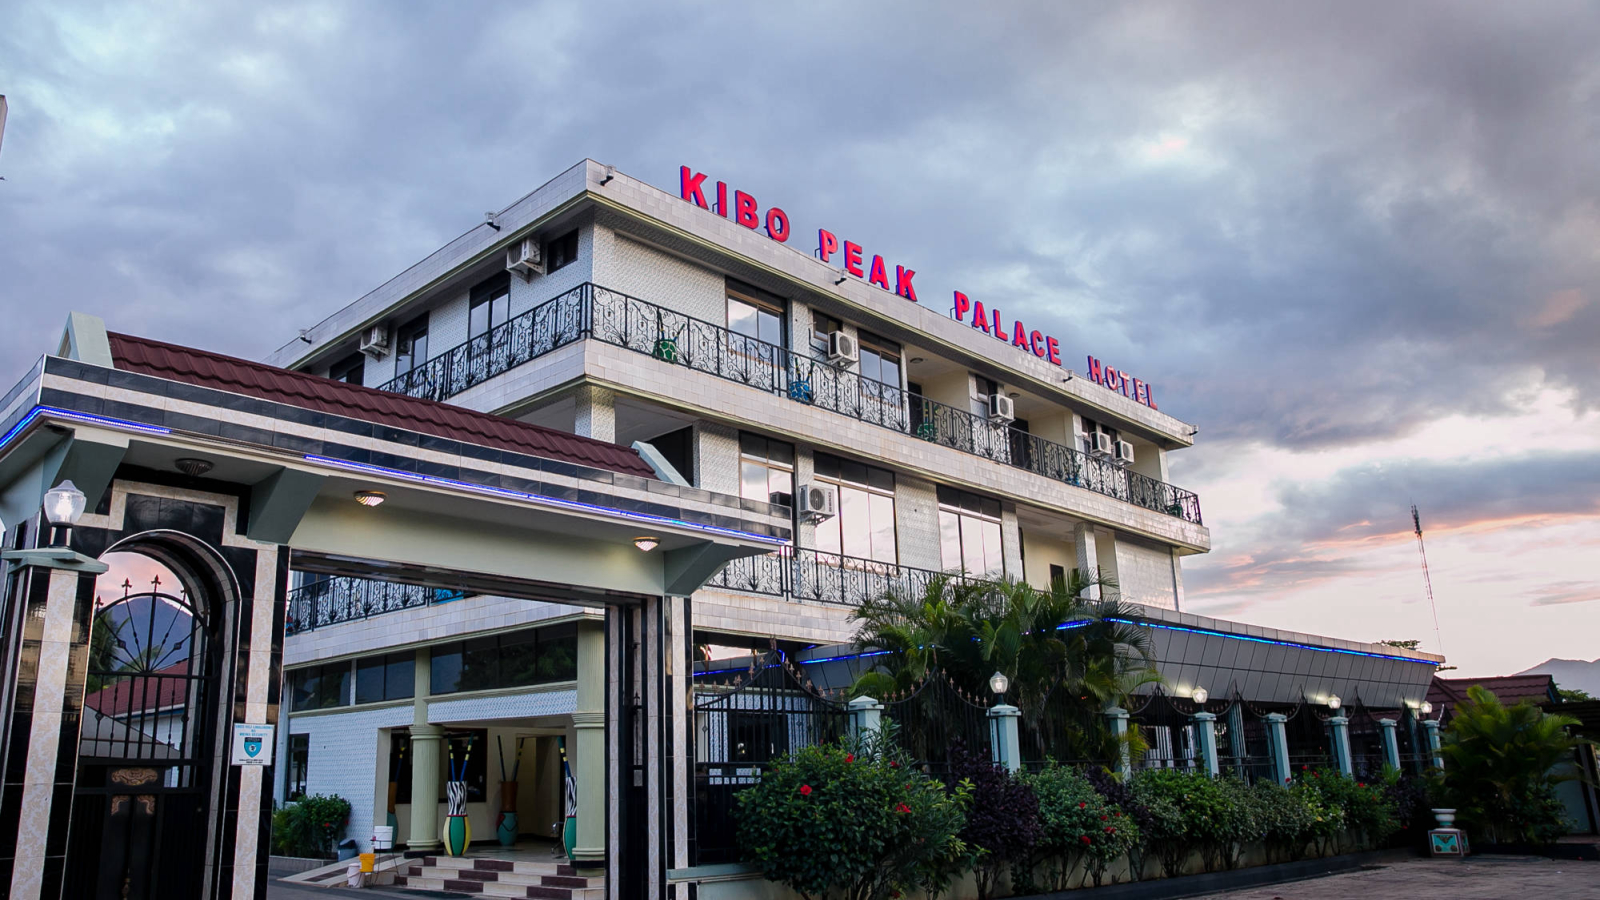 Welcome to Kibo Peak Hotel